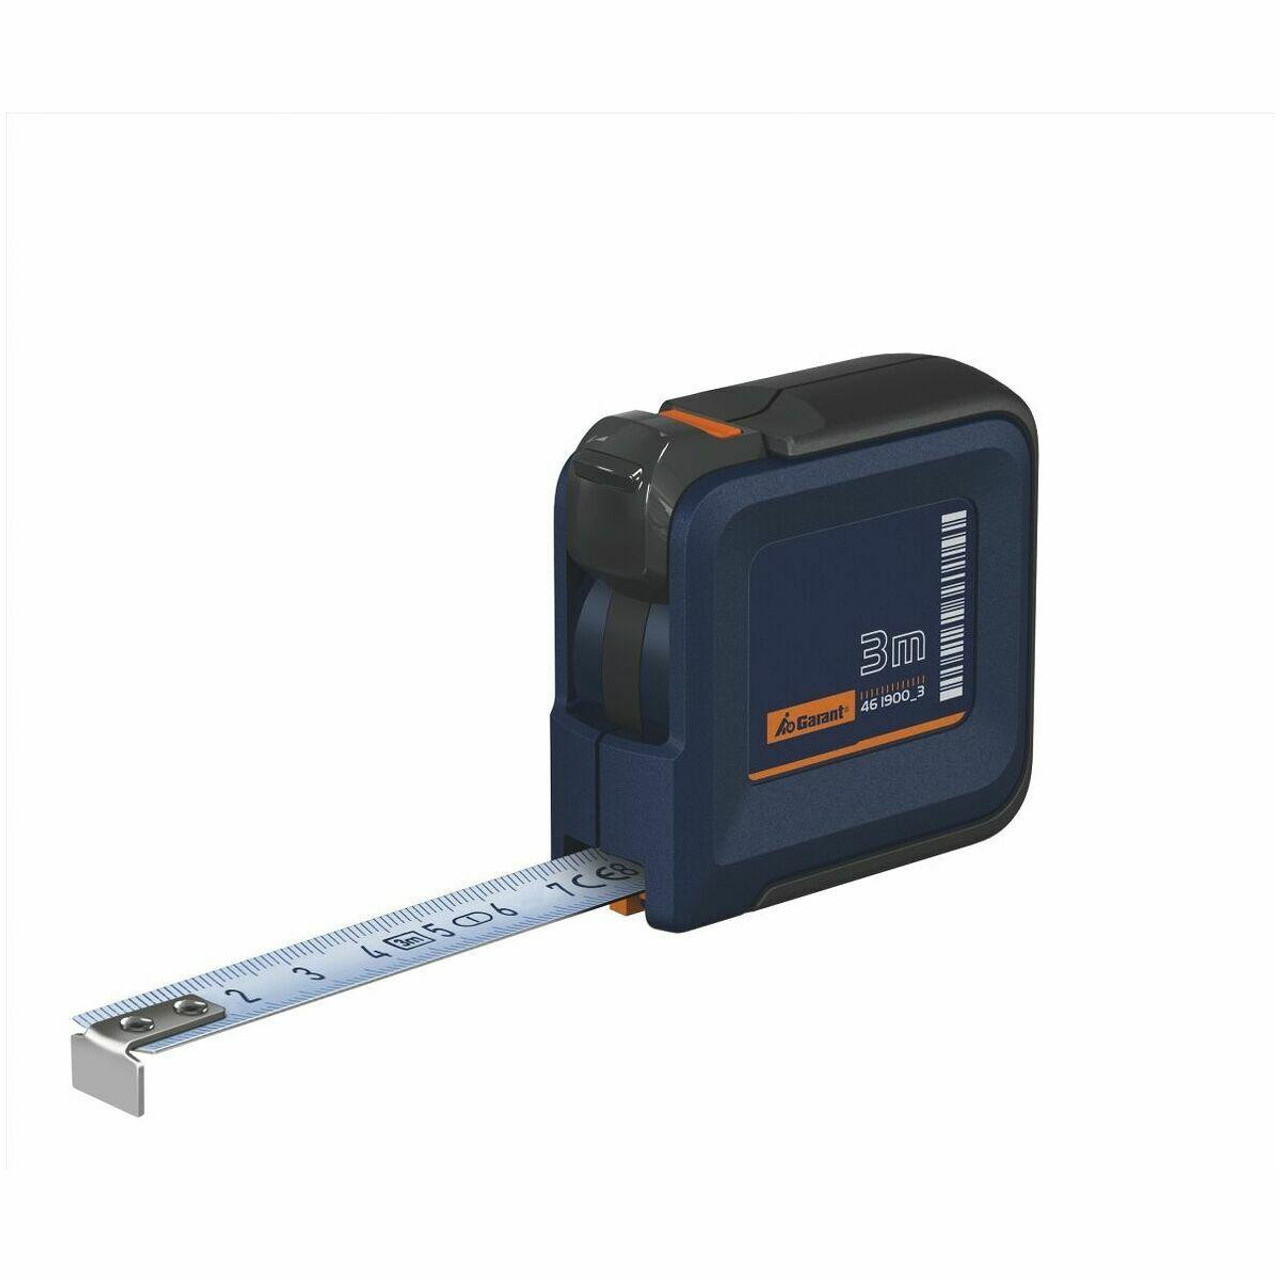 Garant Tape Measure mm/inch (Accuracy Class 2)